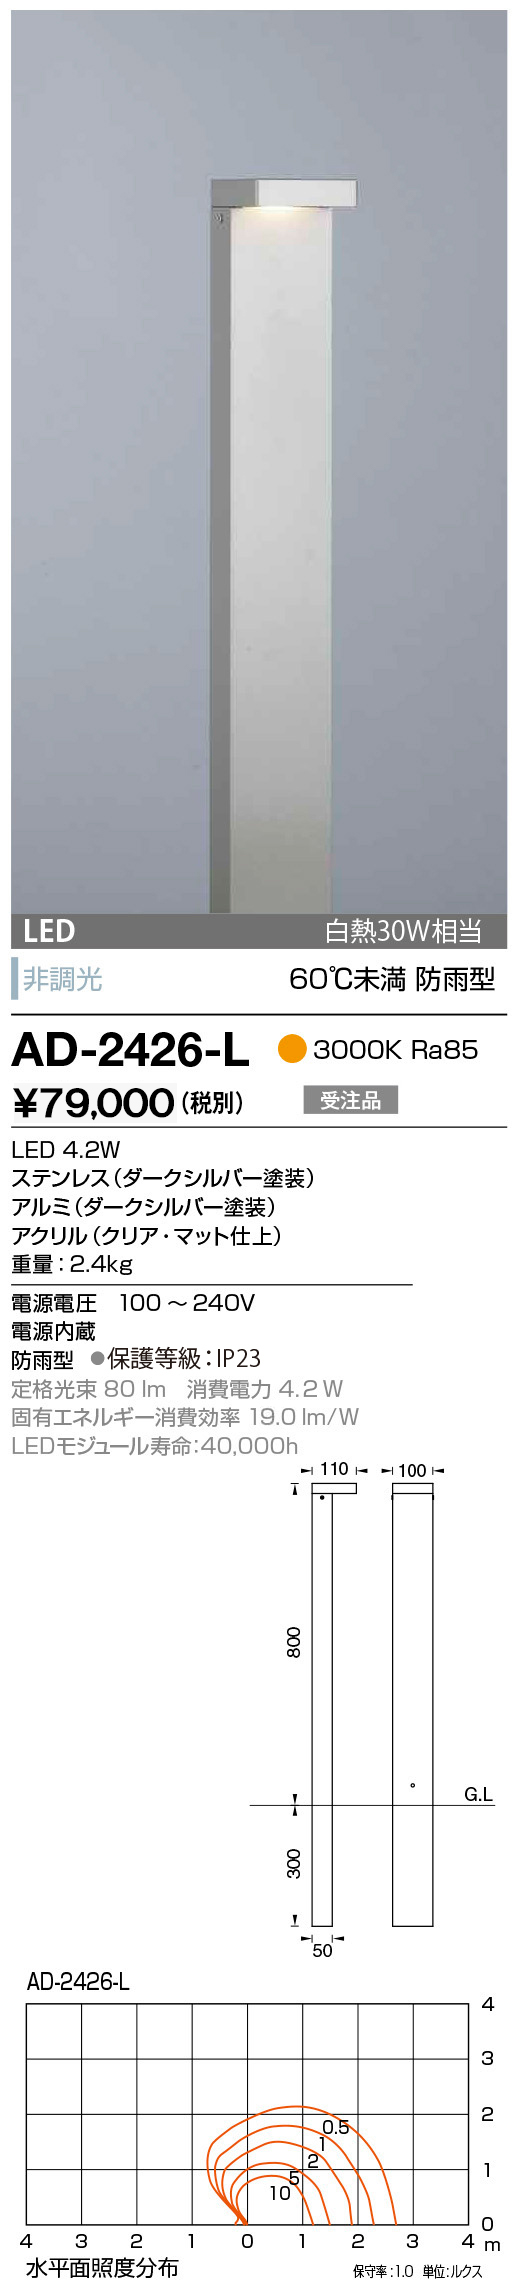 AD-2938-LL 山田照明 ガーデンライト ダークシルバー LED - 4